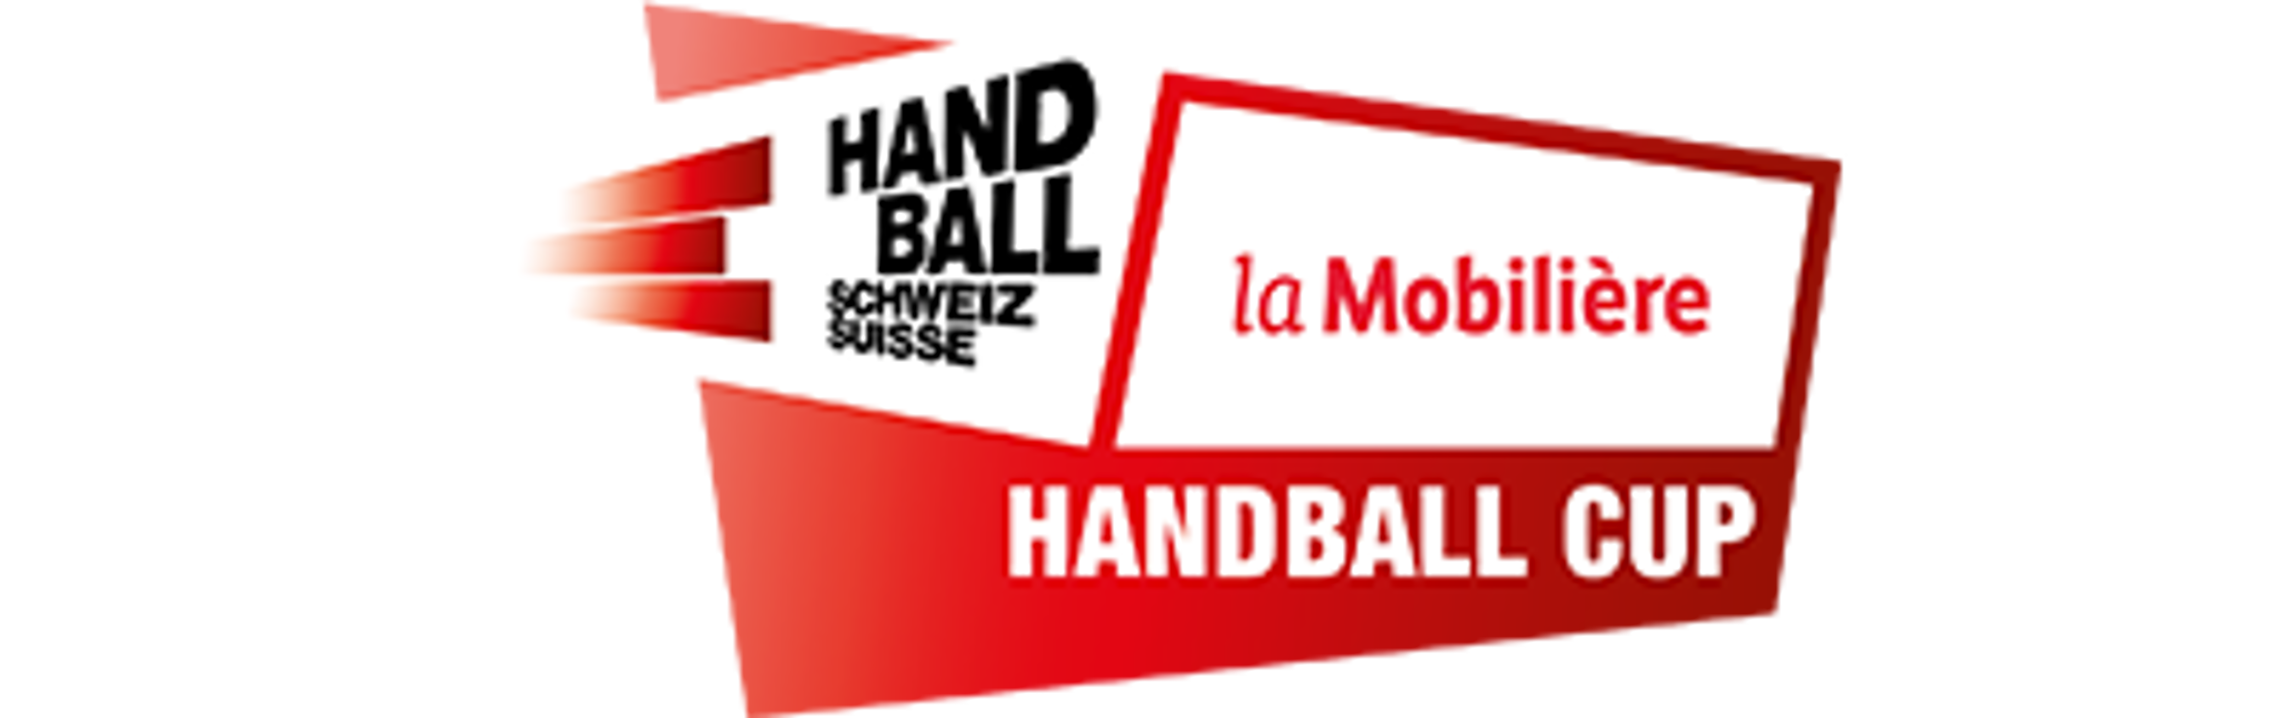 La Mobiliere Handball Coupe